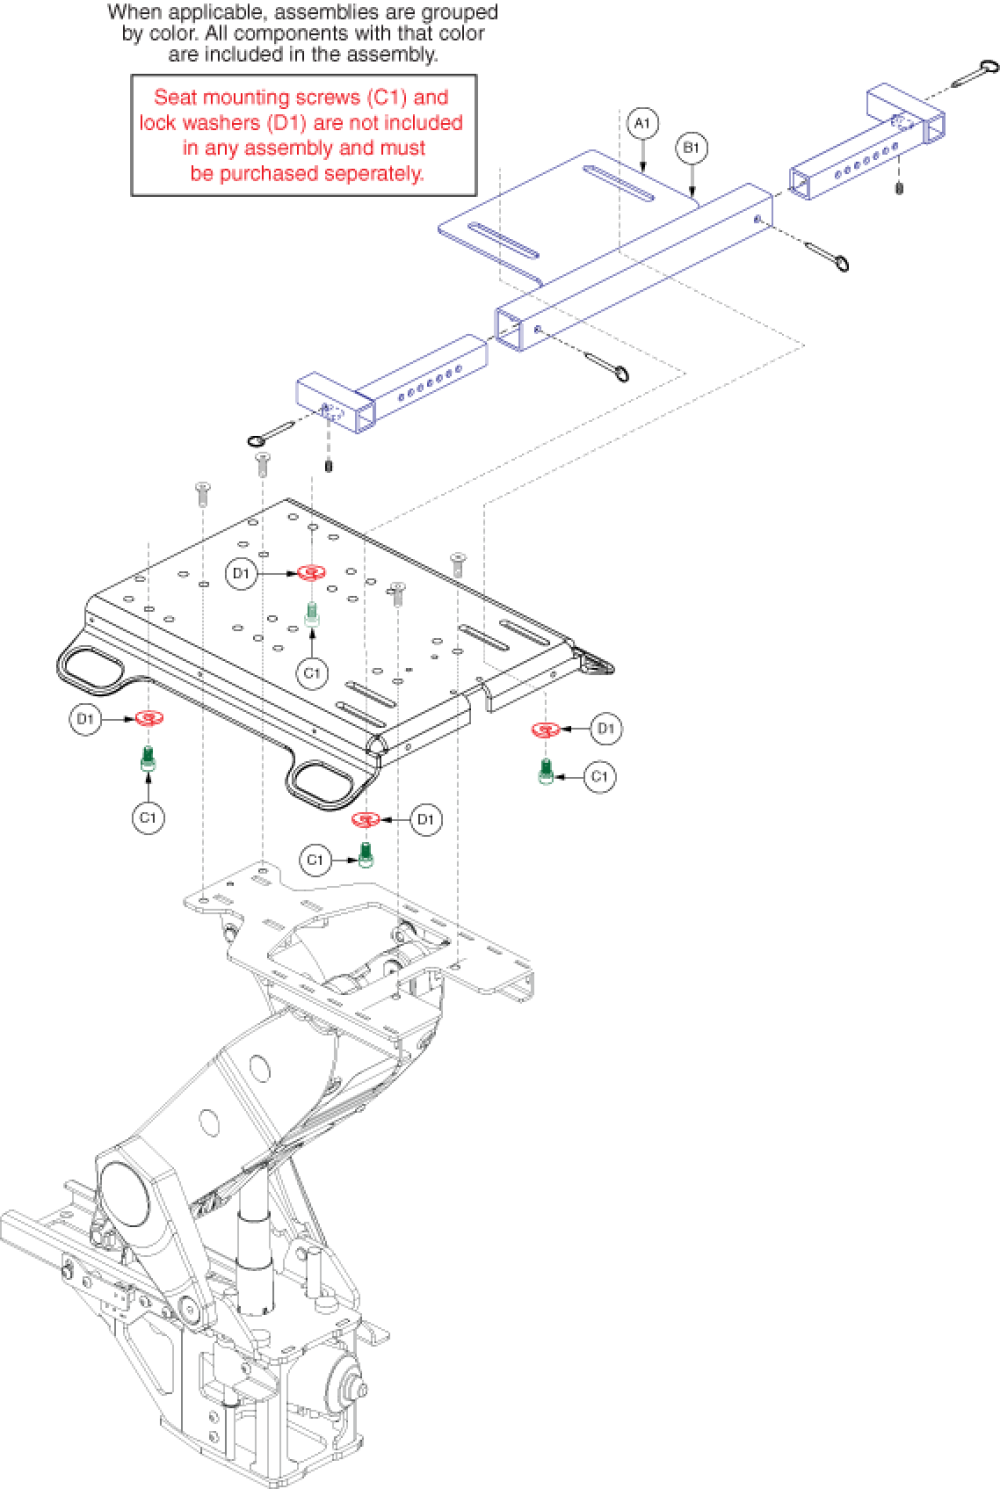 Air2 - Elr Legrest Mounting Bracket Assembly parts diagram